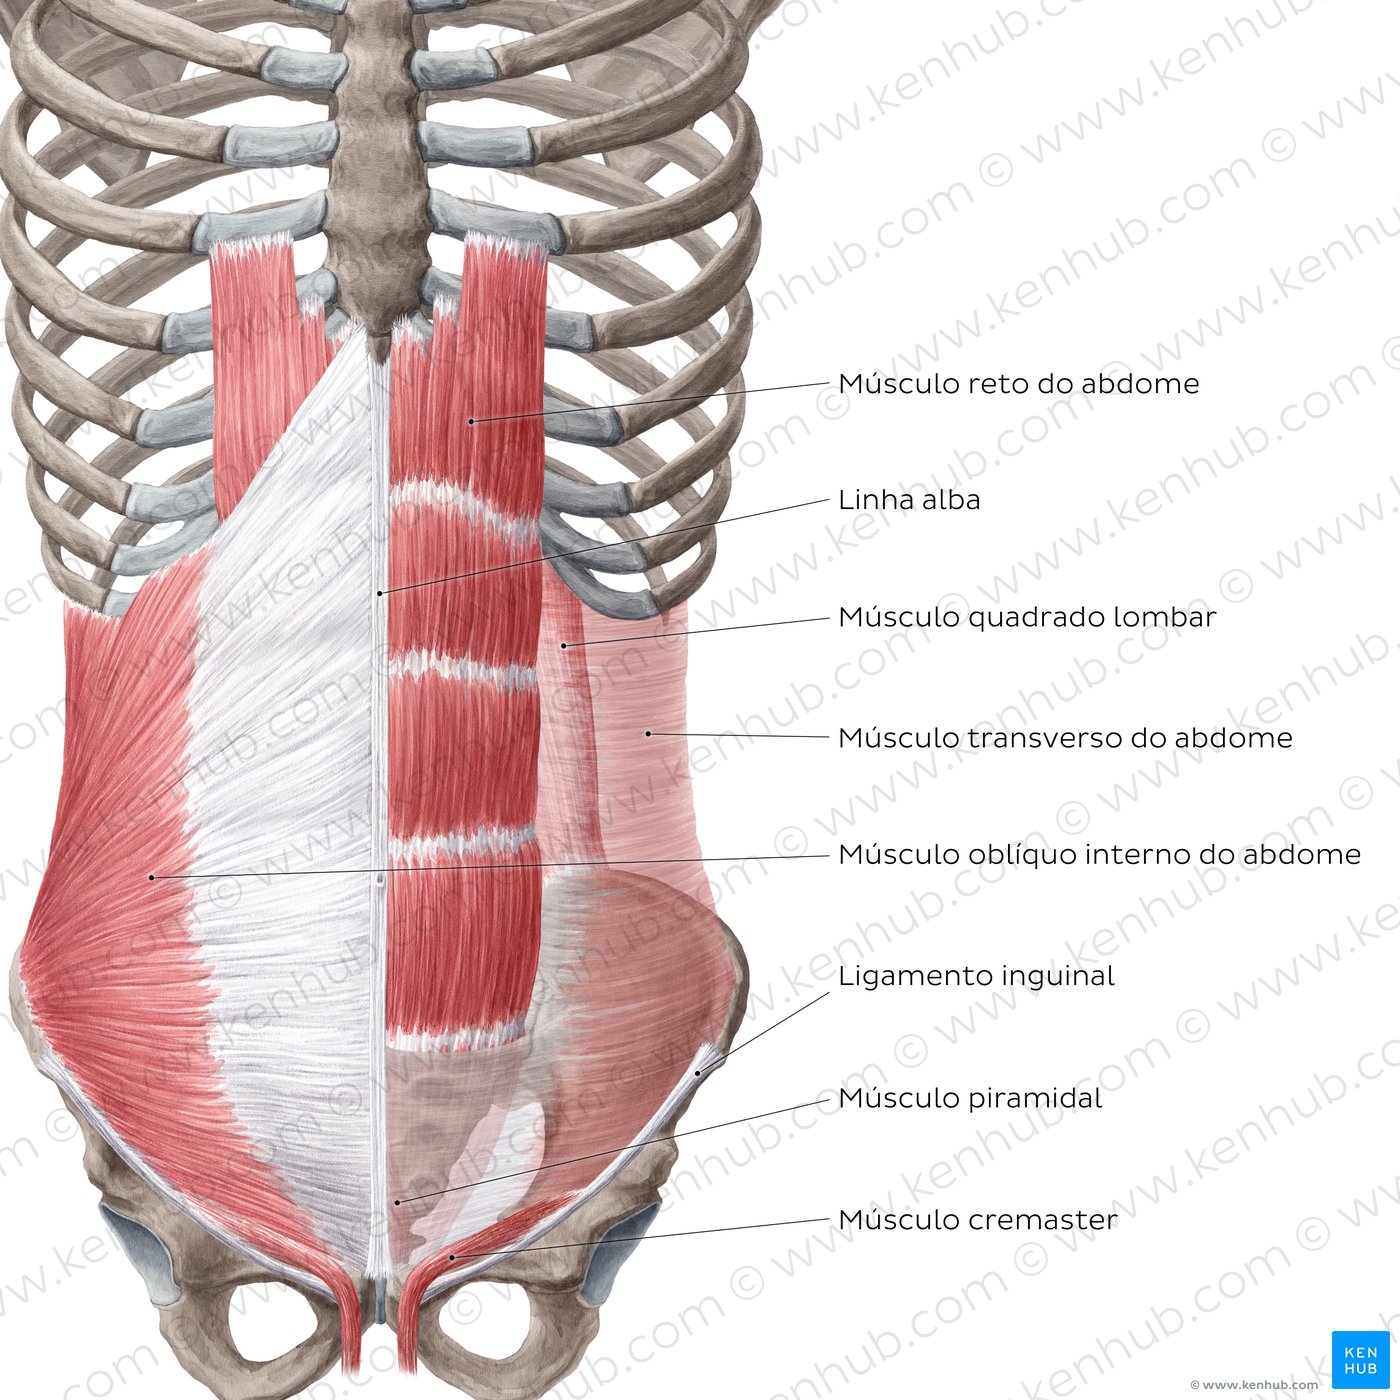 Músculos da parede abdominal